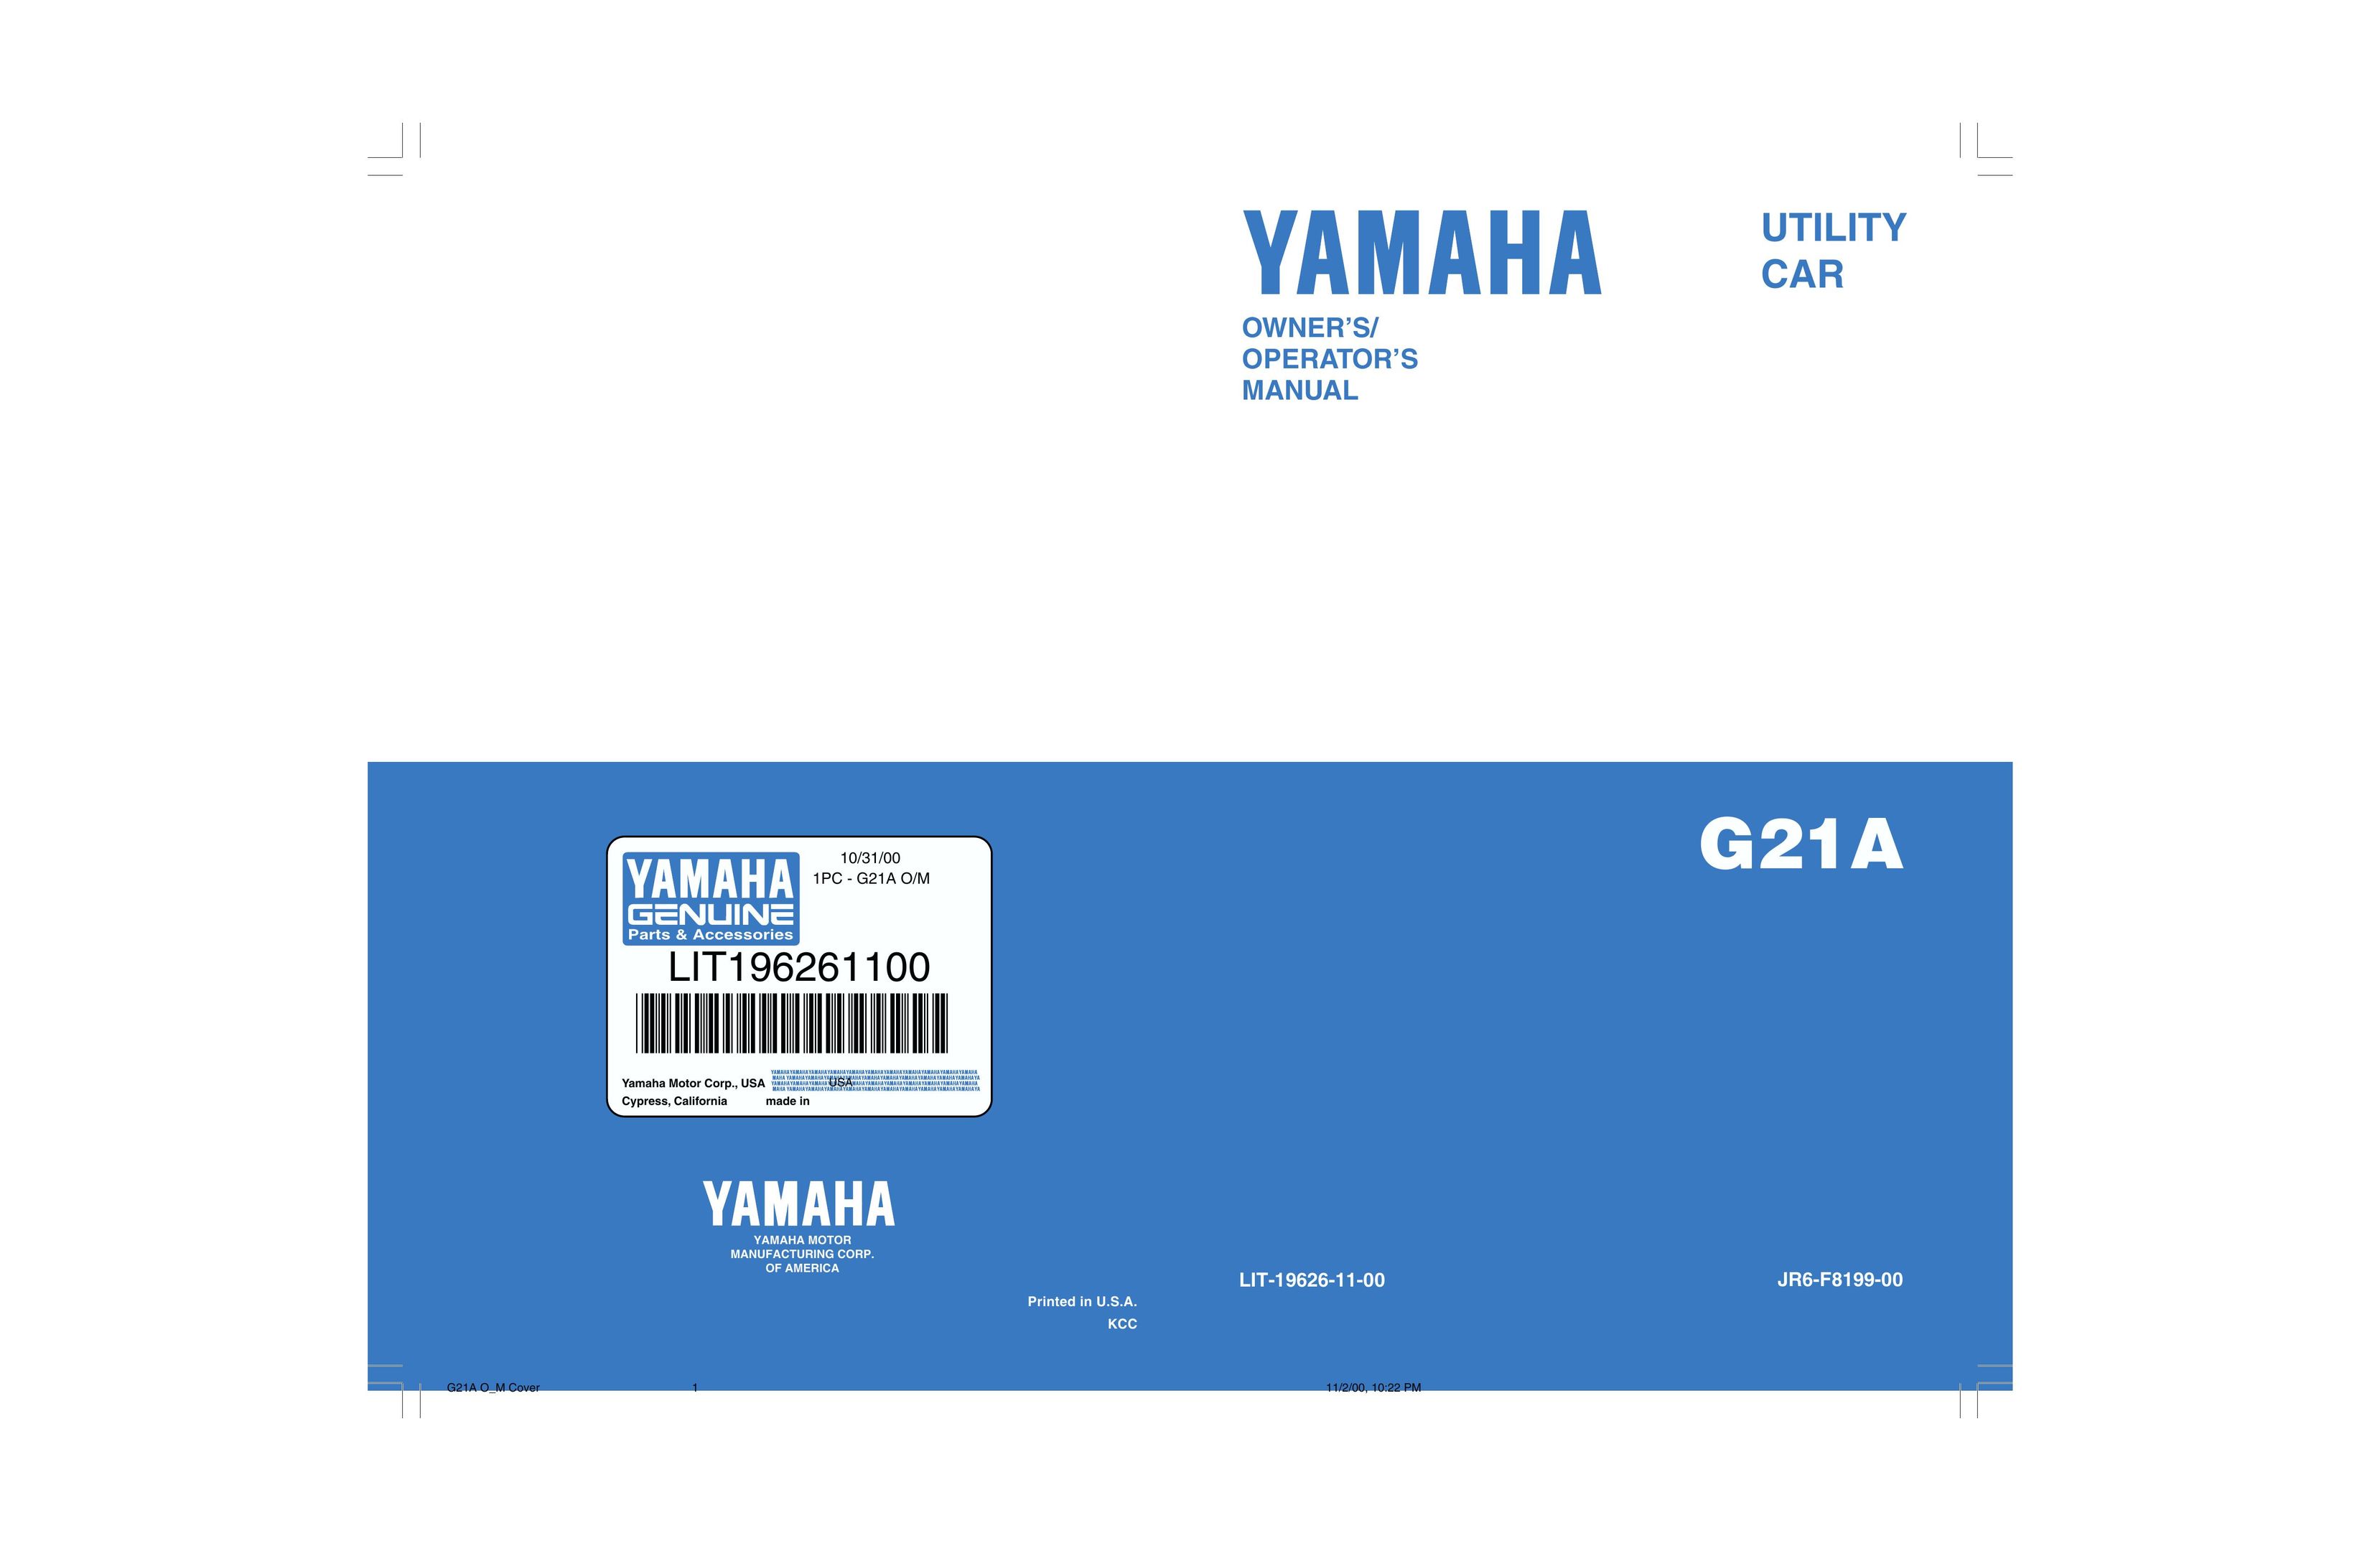 Yamaha G21A Water Pump User Manual